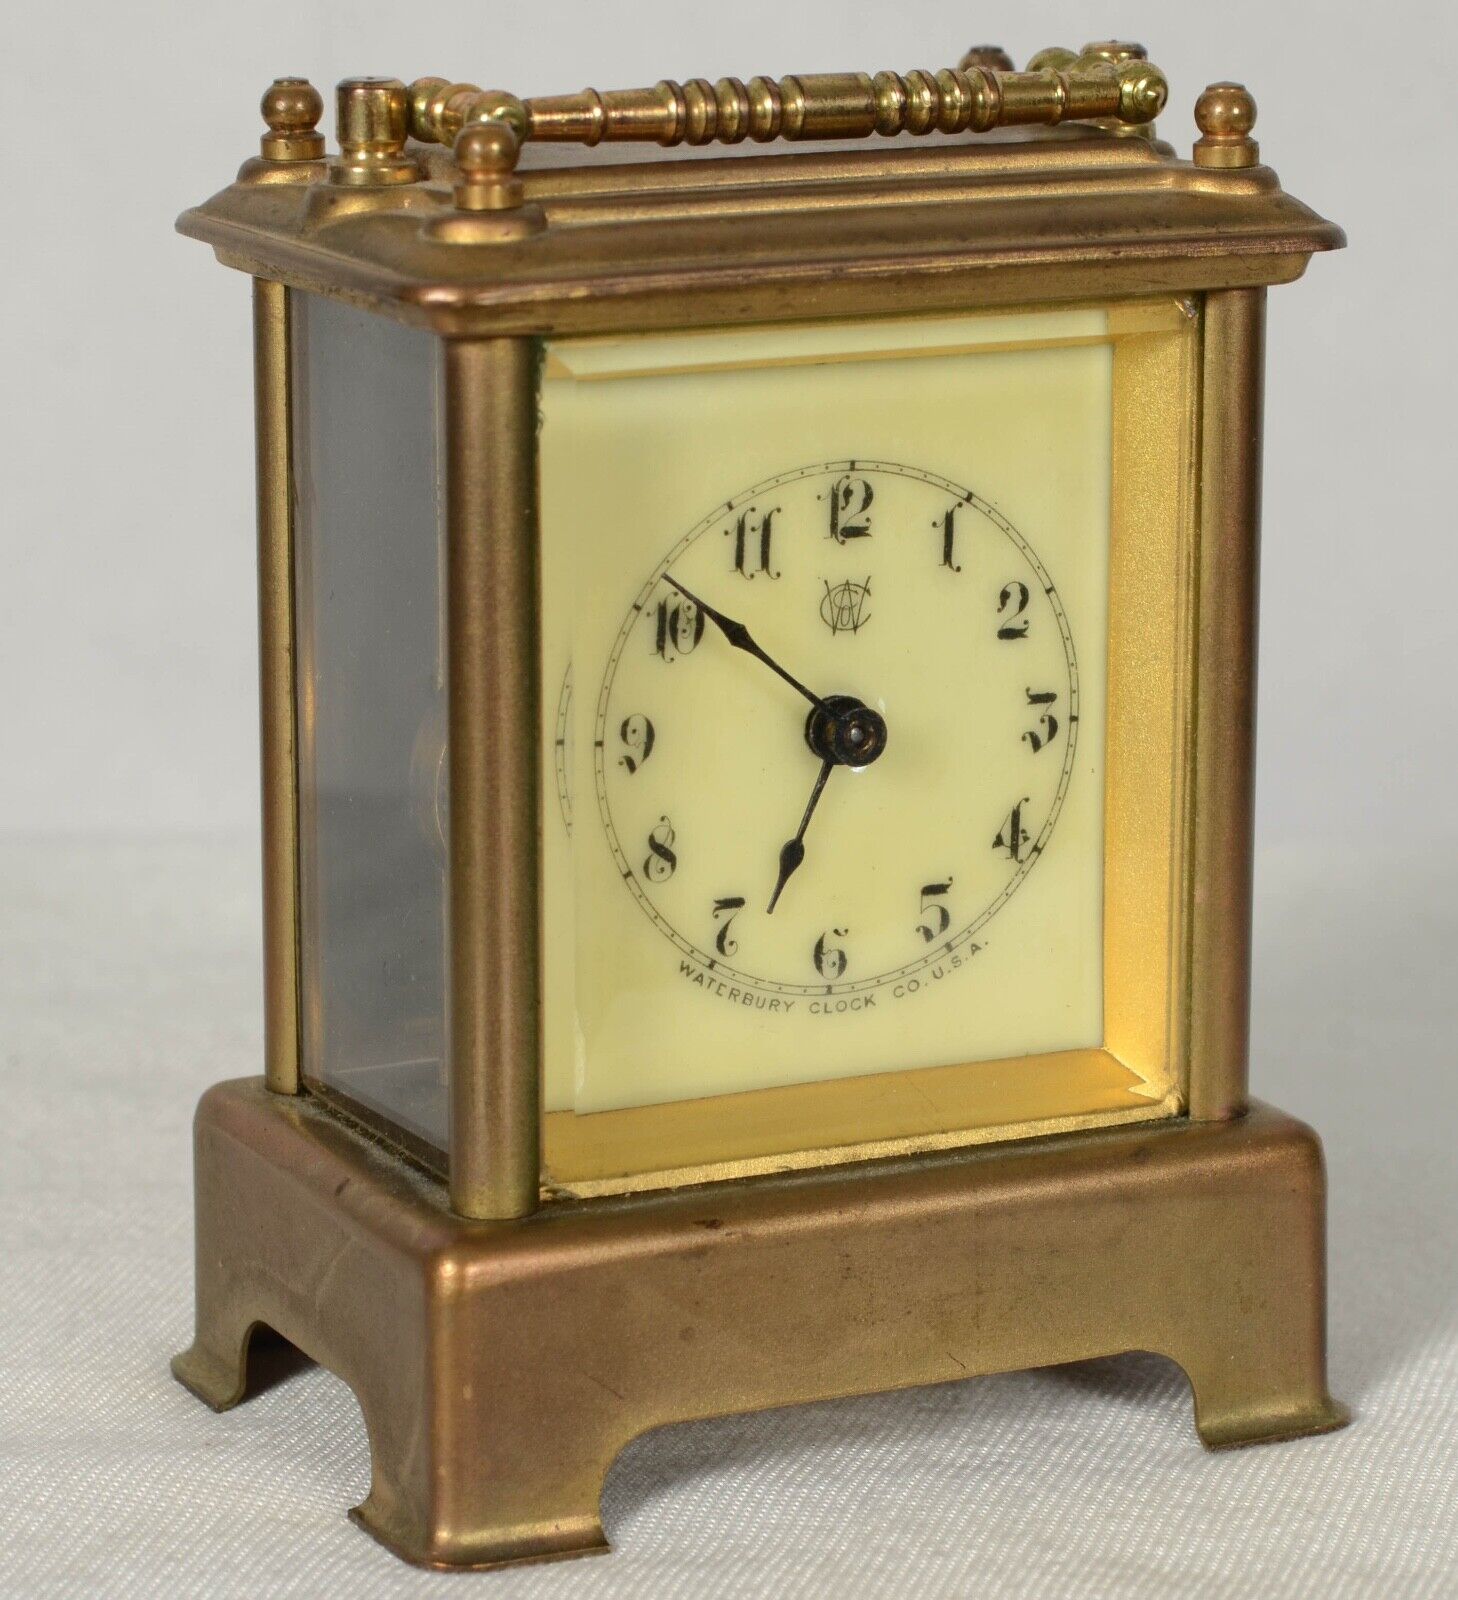 WATERBURY Repeater Brass & Beveled Glass Time & Strike Carriage Alarm Clock